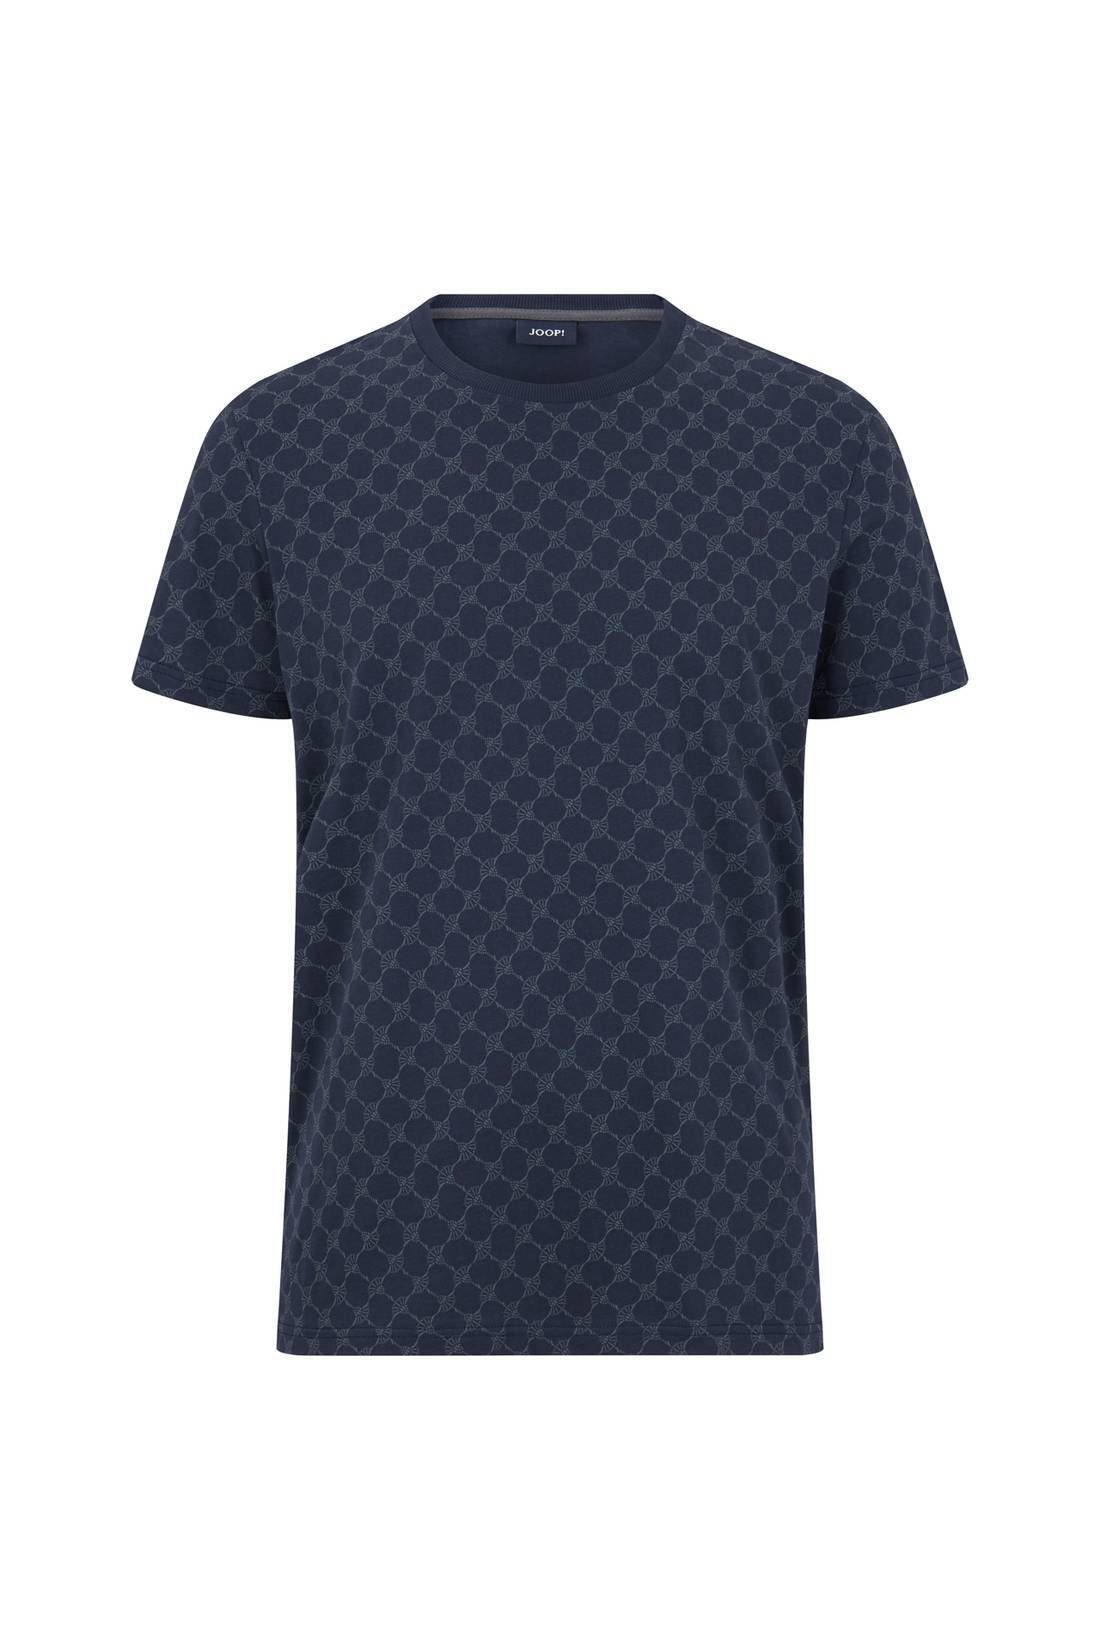 Joop! T-Shirt Herren T-Shirt - Loungewear, Rundhals, Halbarm Blau